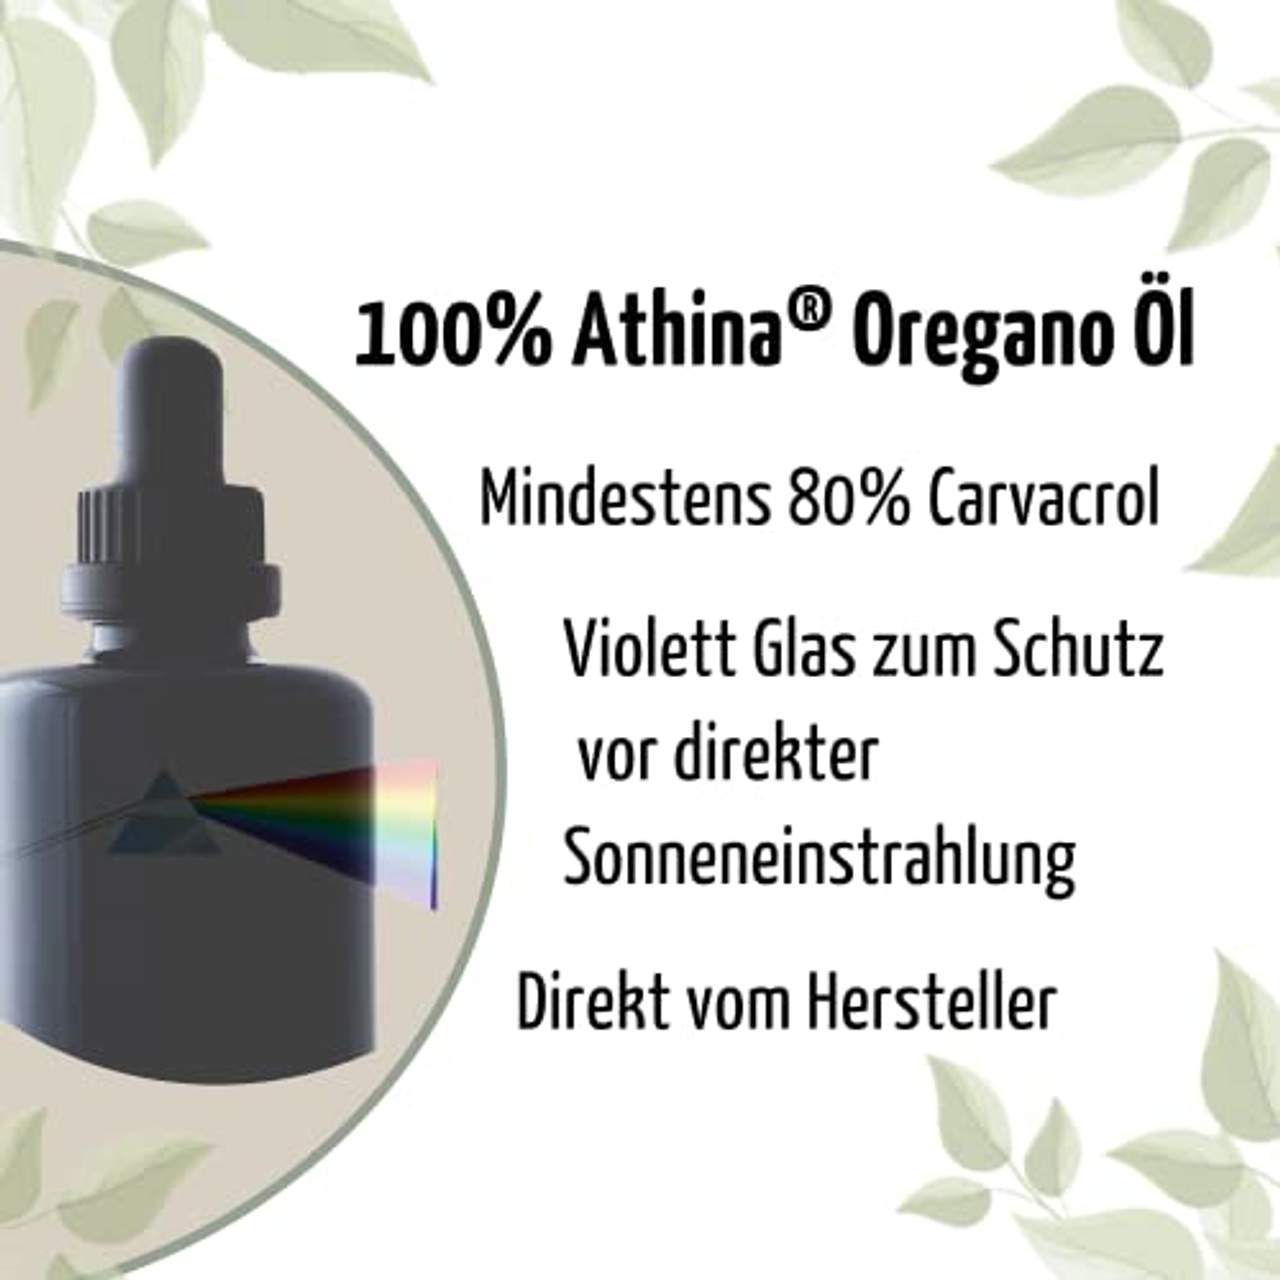 Athina Oregano Öl Bio DE-ÖKO-006 100% ätherisches Oreganoöl Origanum